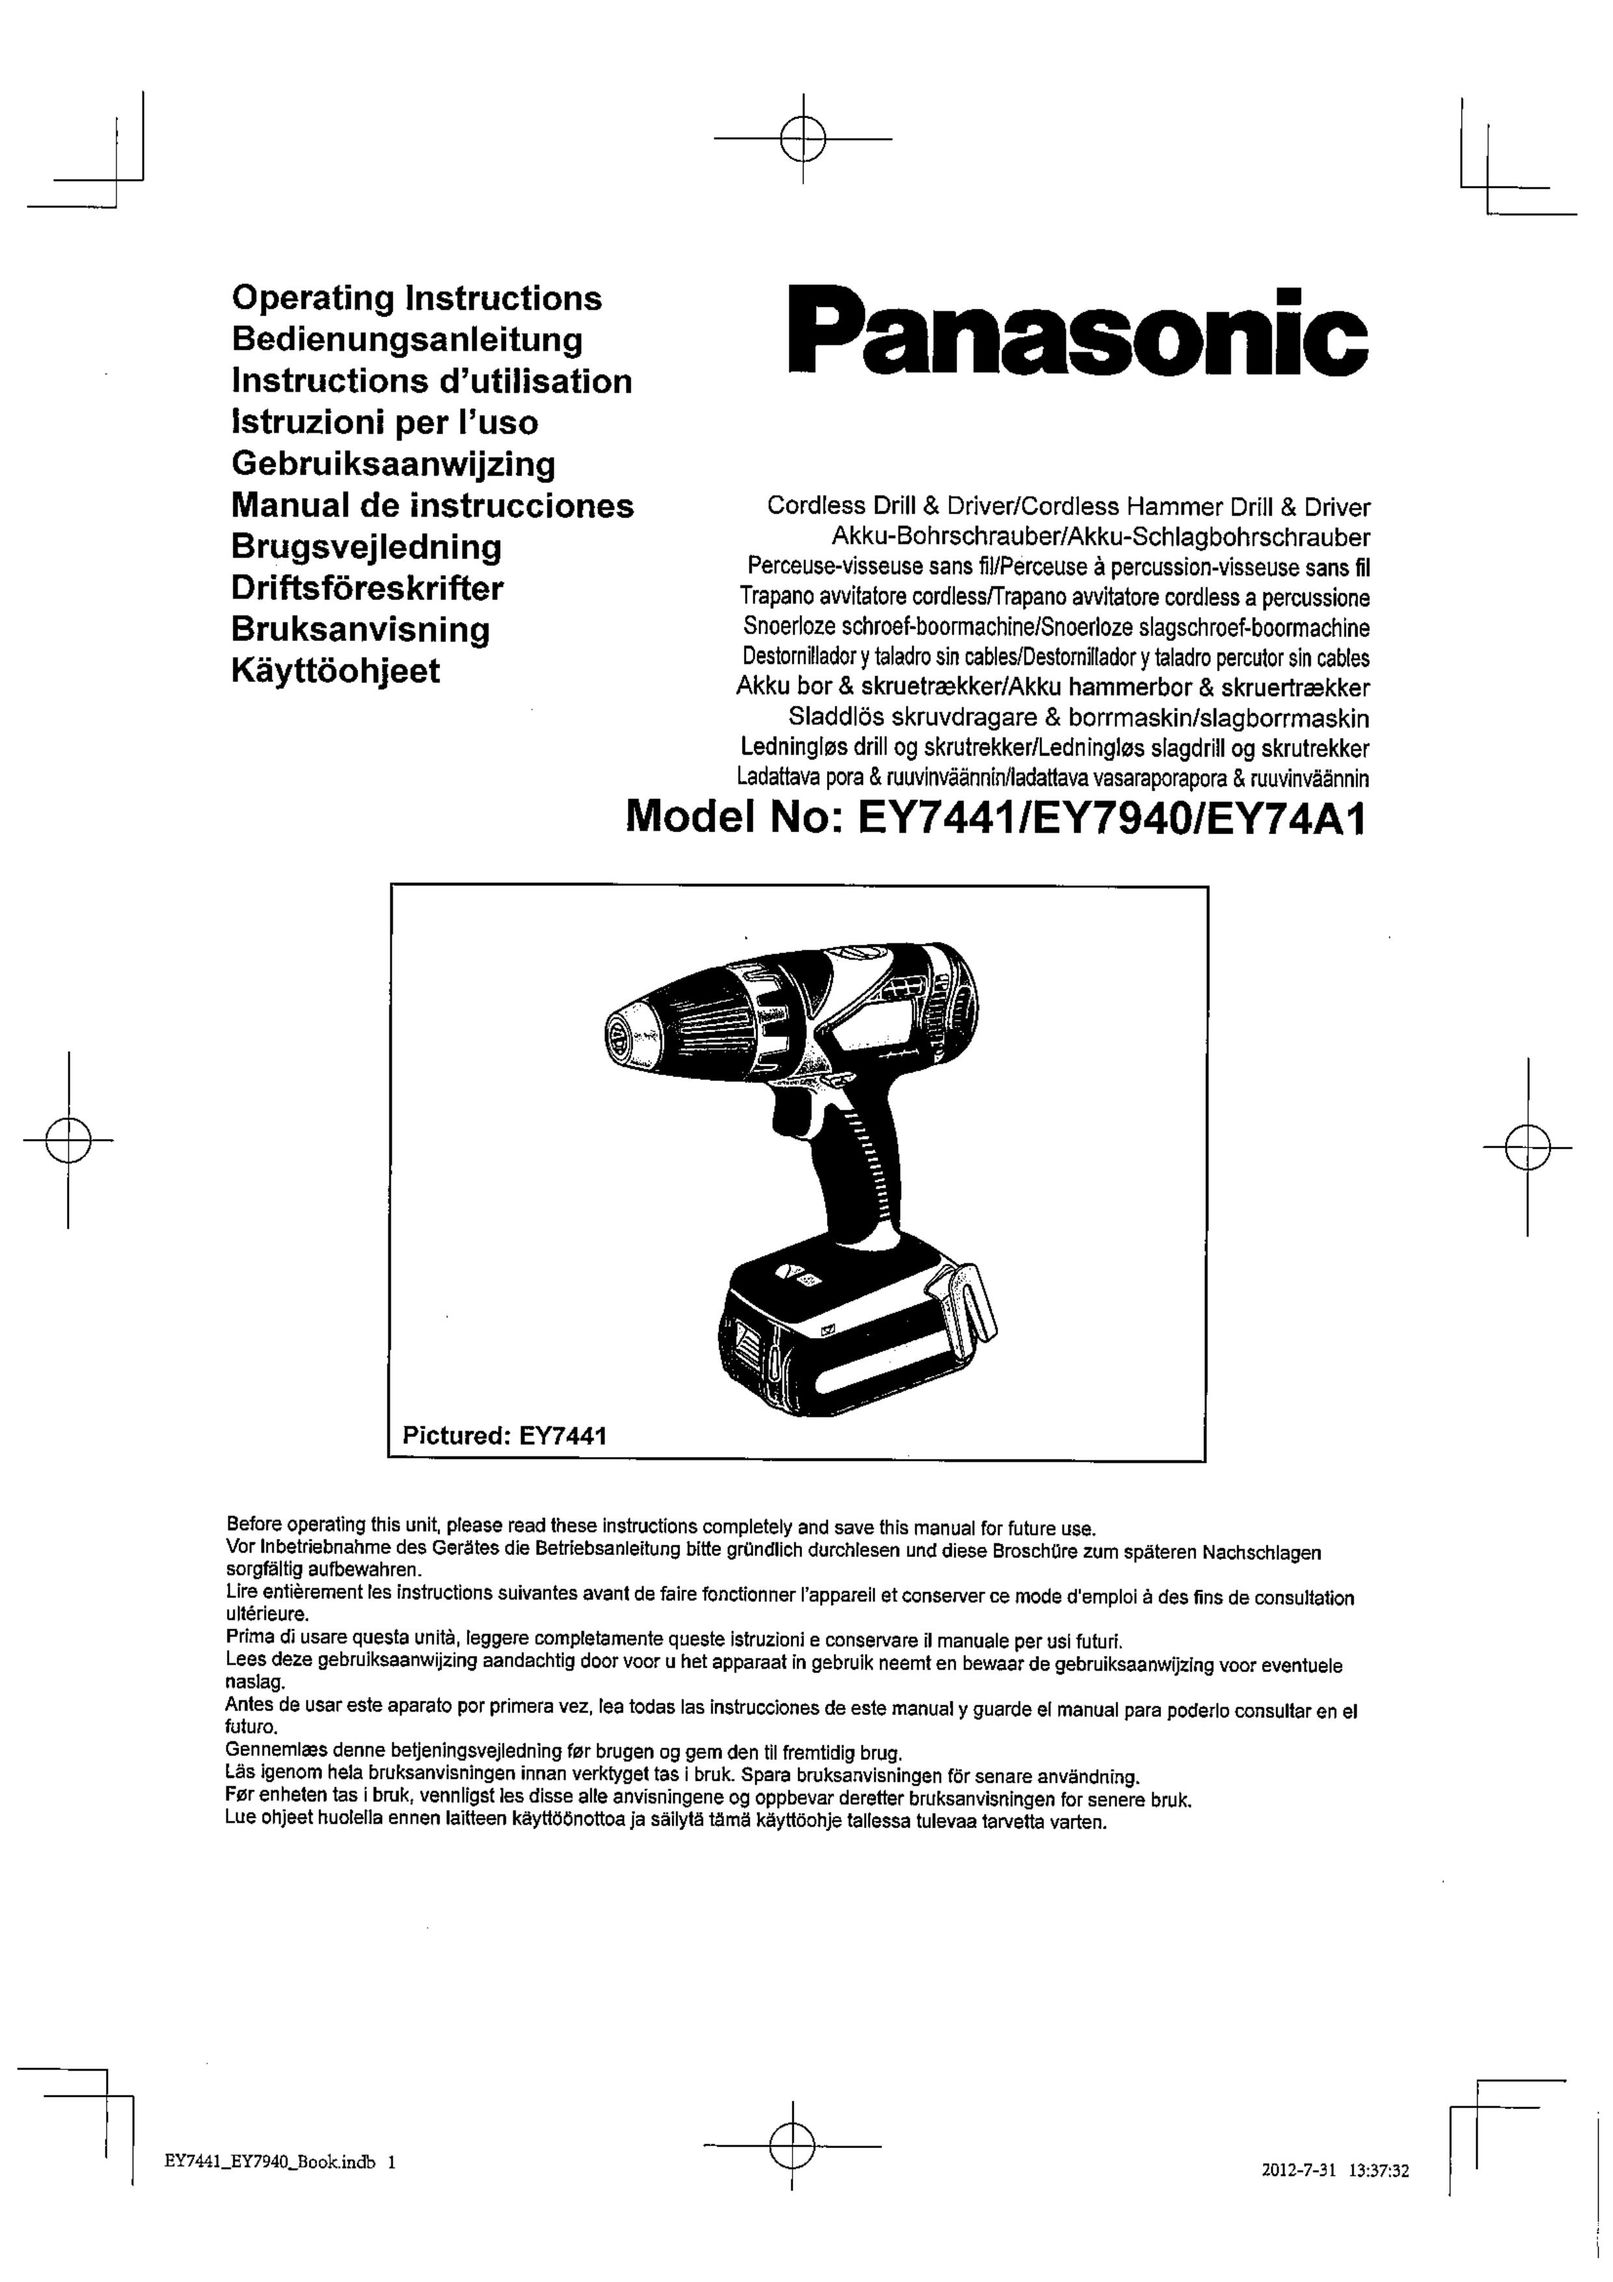 Panasonic ey7441 Cordless Drill User Manual